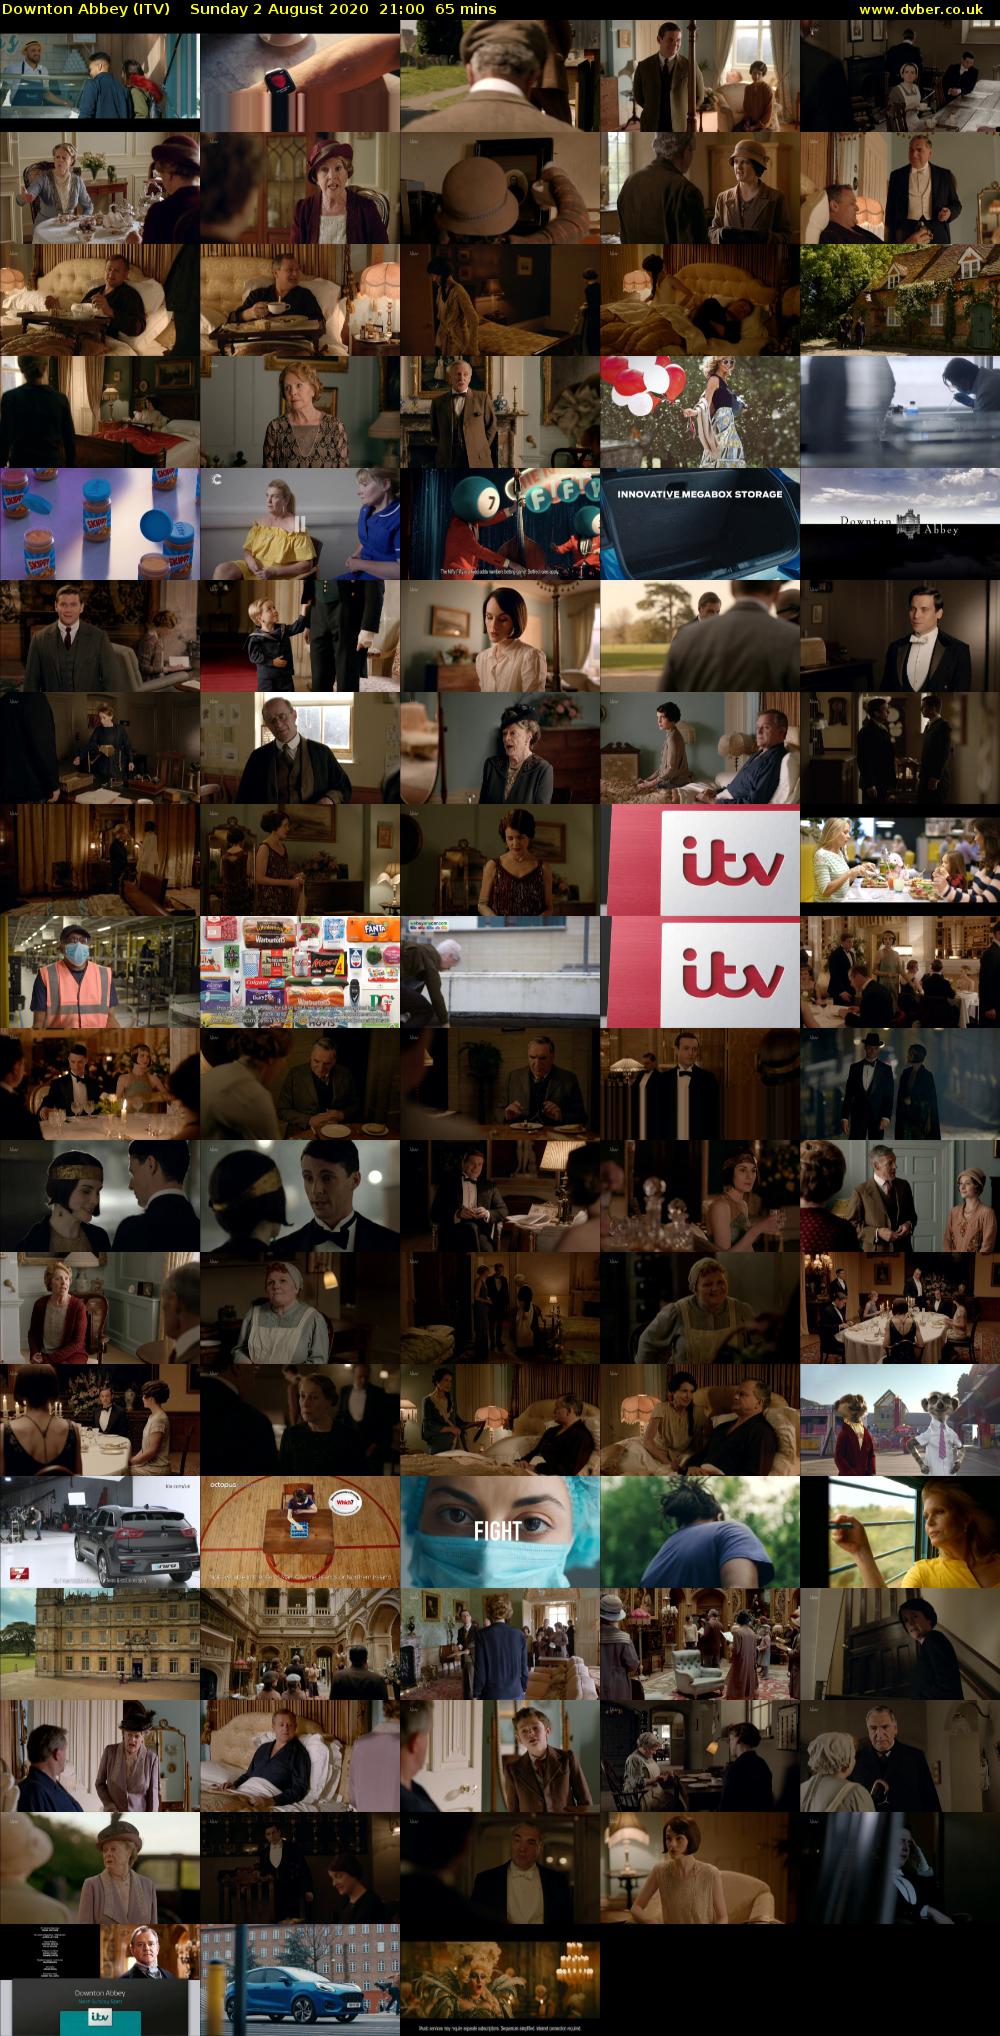 Downton Abbey (ITV) Sunday 2 August 2020 21:00 - 22:05